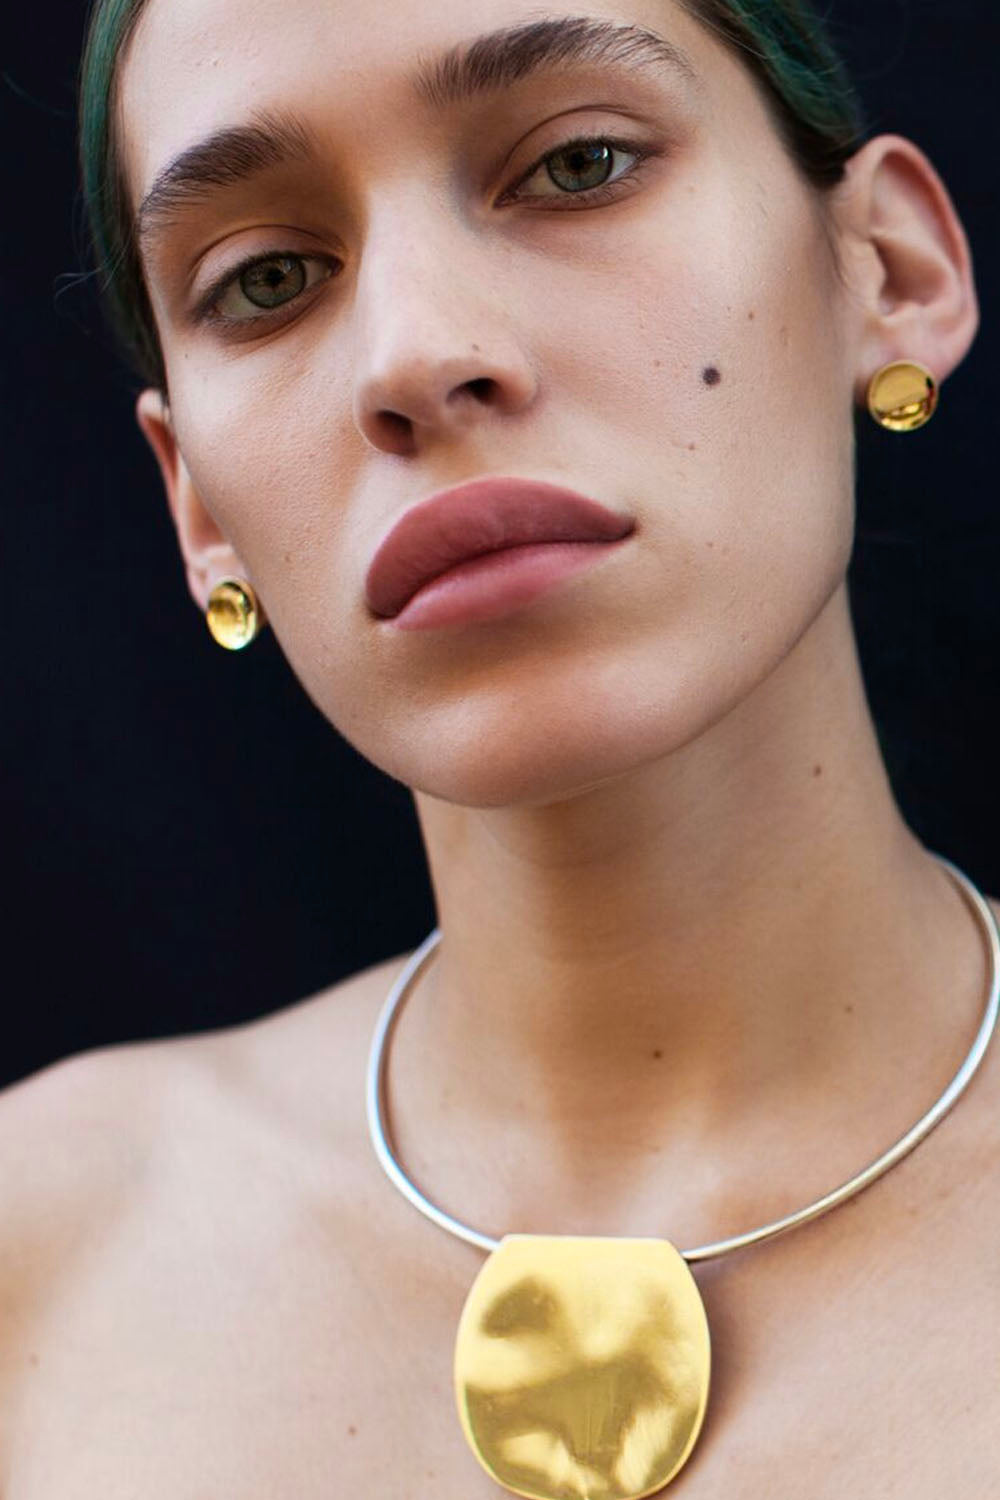 Scarpa Earrings - Large - Bing Bang Jewelry NYC